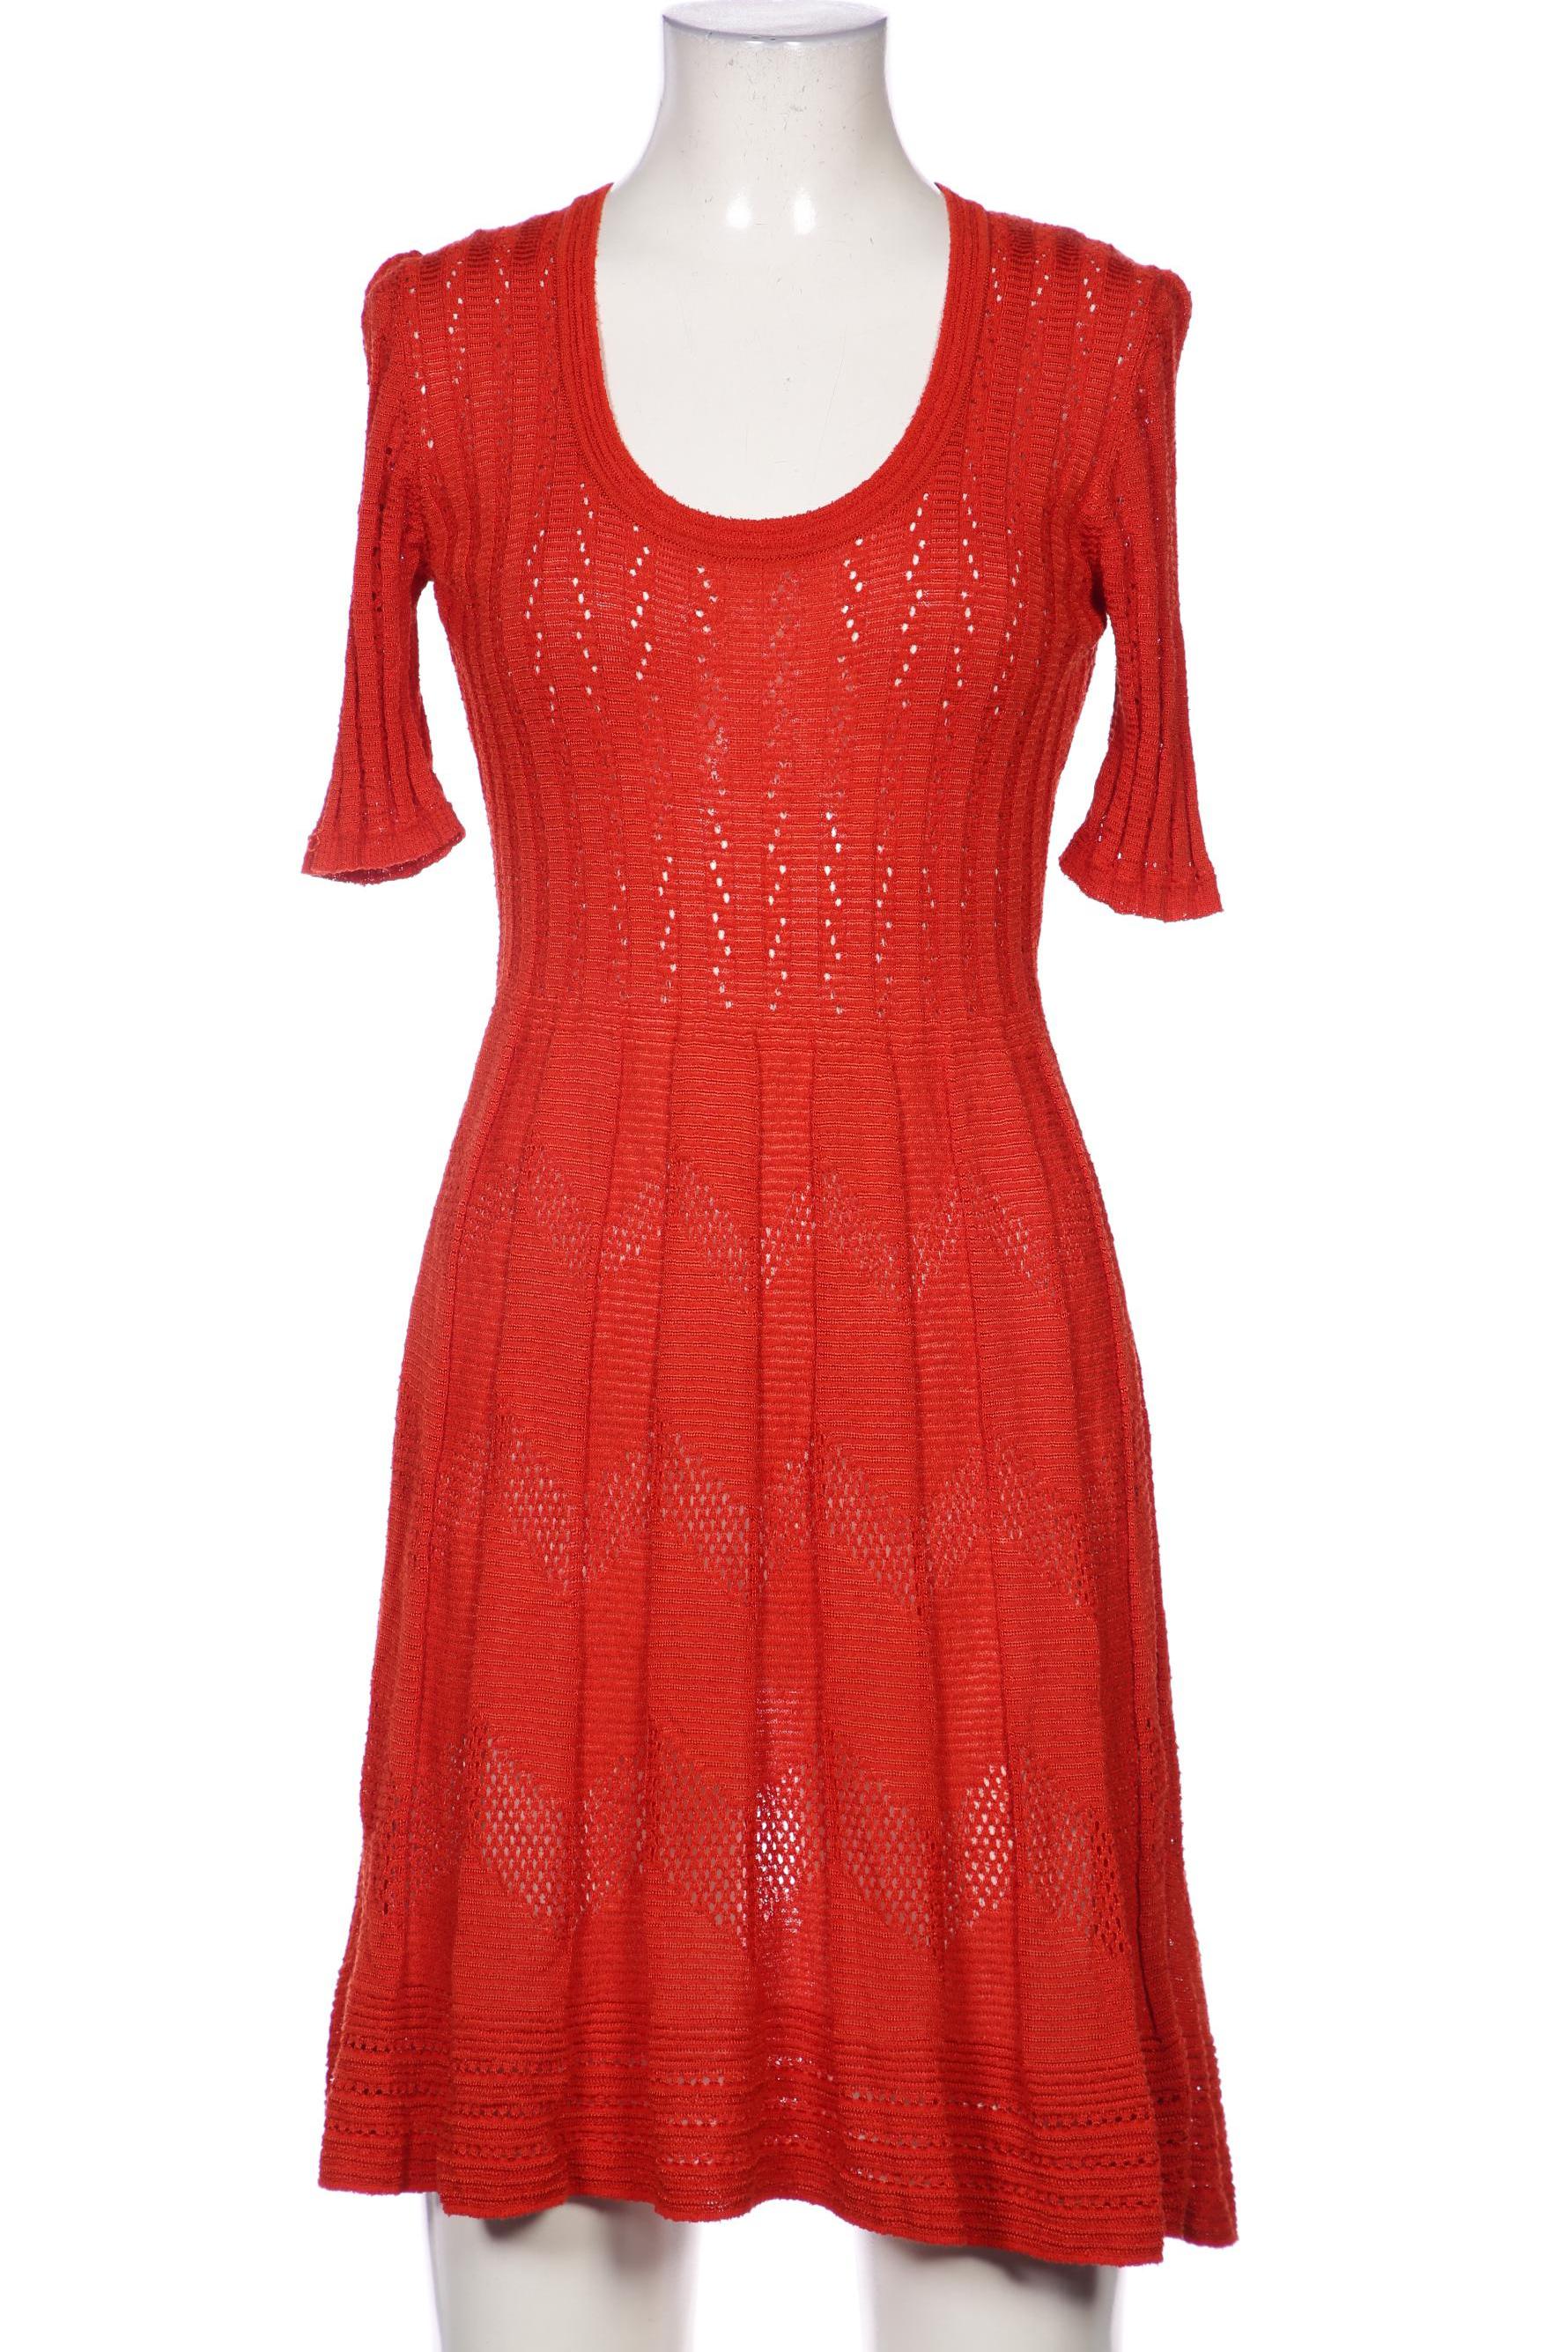 M MISSONI Damen Kleid, rot von M Missoni